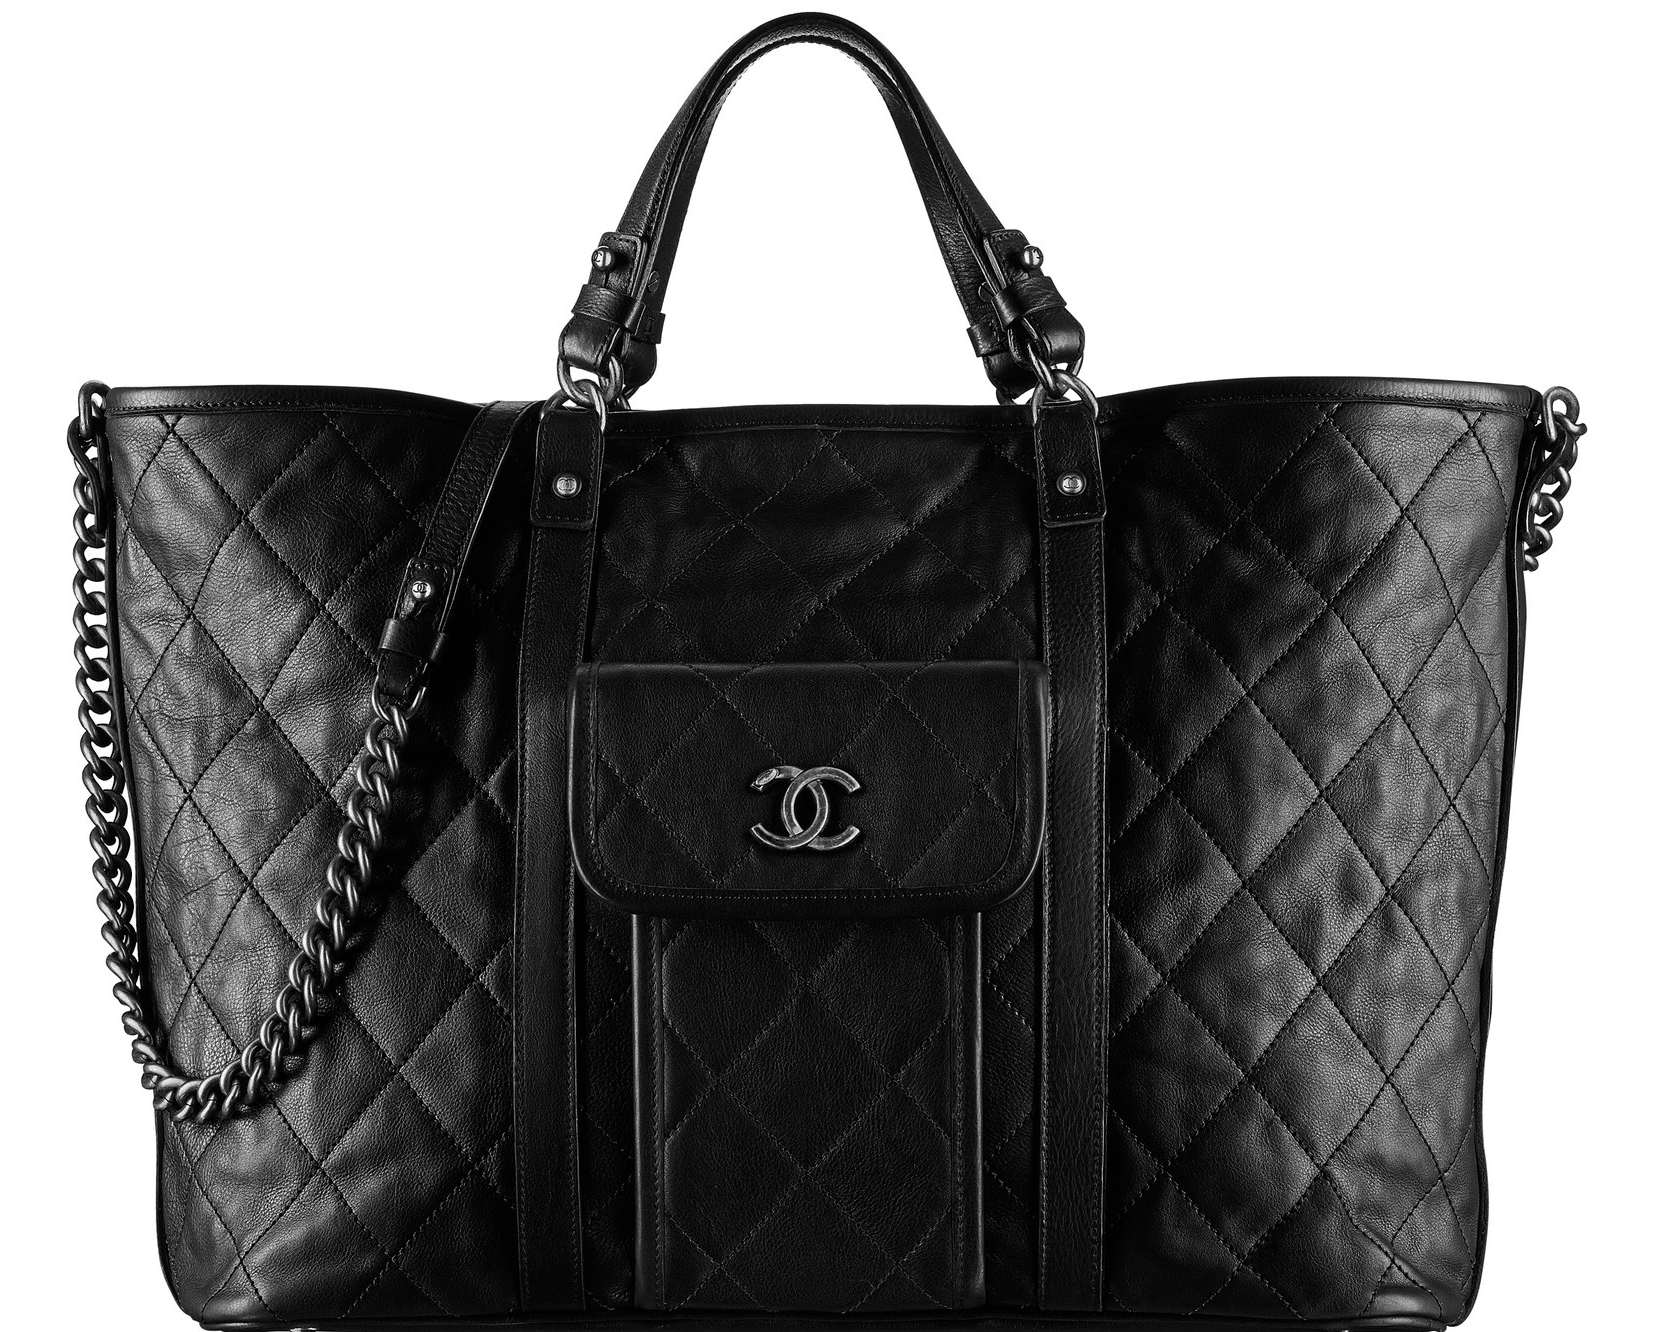 Chanel large calfskin shopping bag